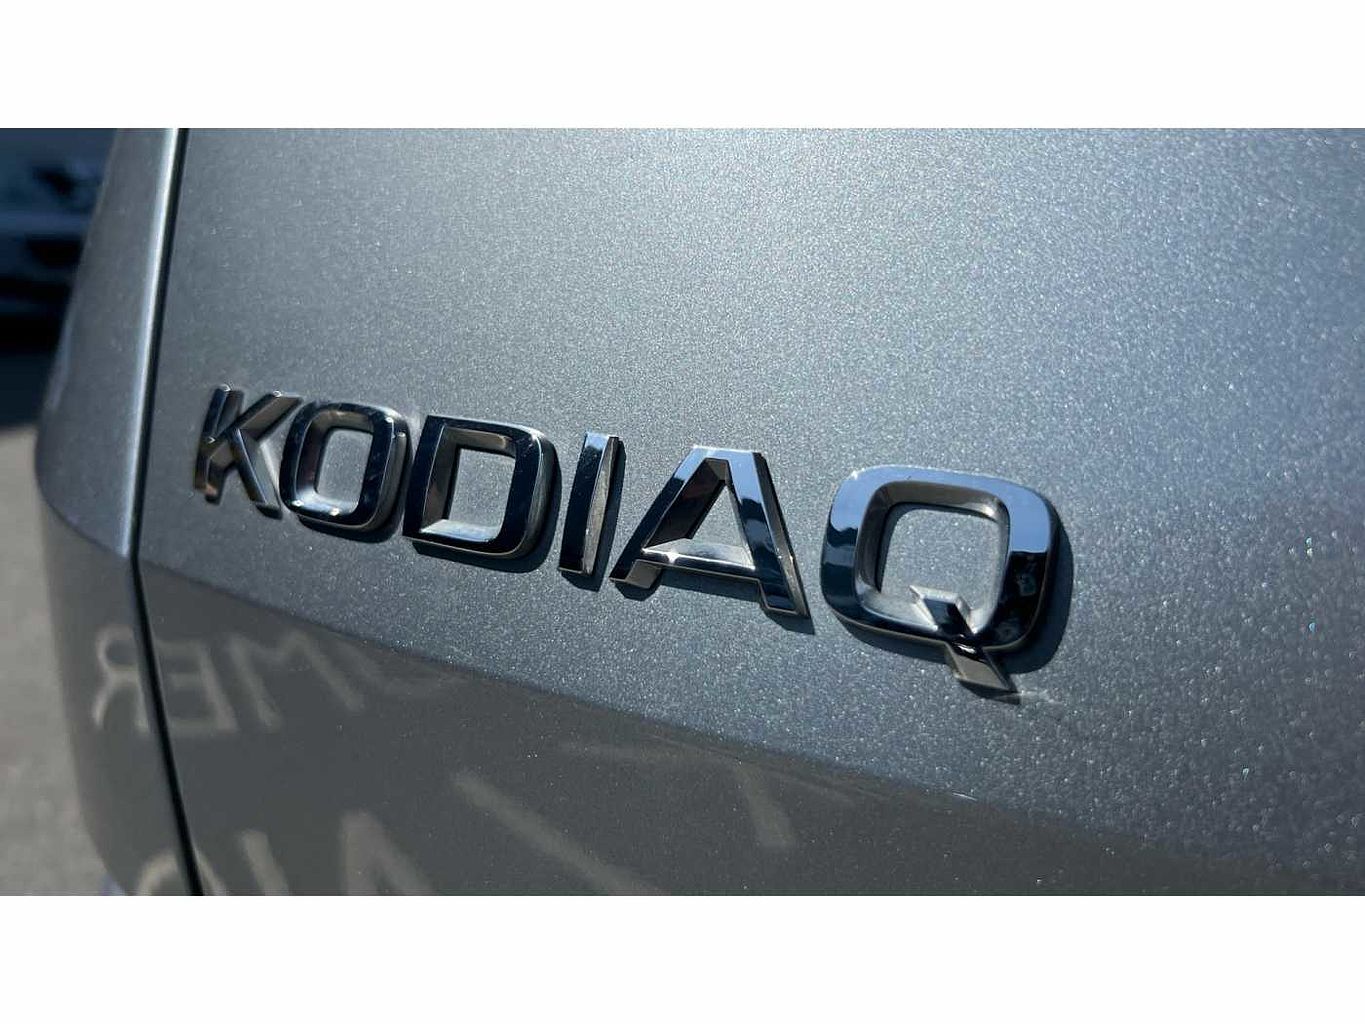 SKODA Kodiaq 1.5 TSI (150ps) SE Drive (7 seats) ACT